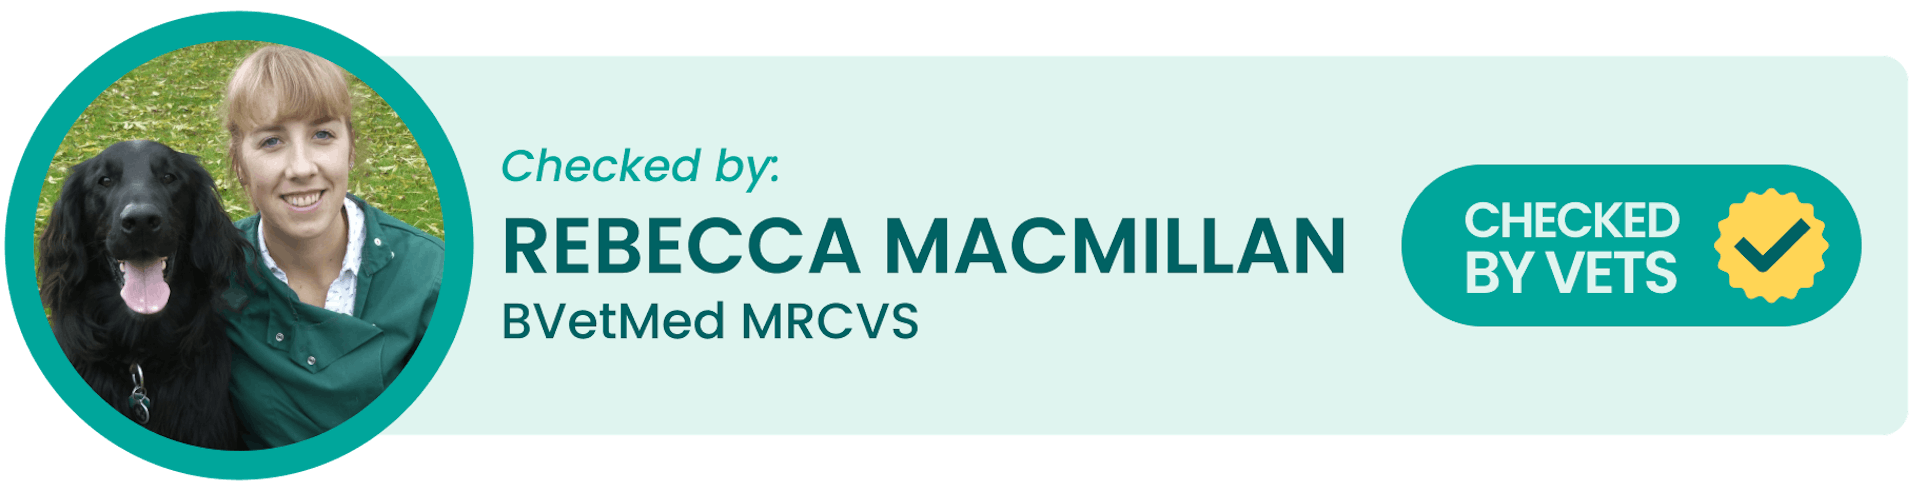 Checked by: Rebecca MacMillan, BVetMed MRCVS